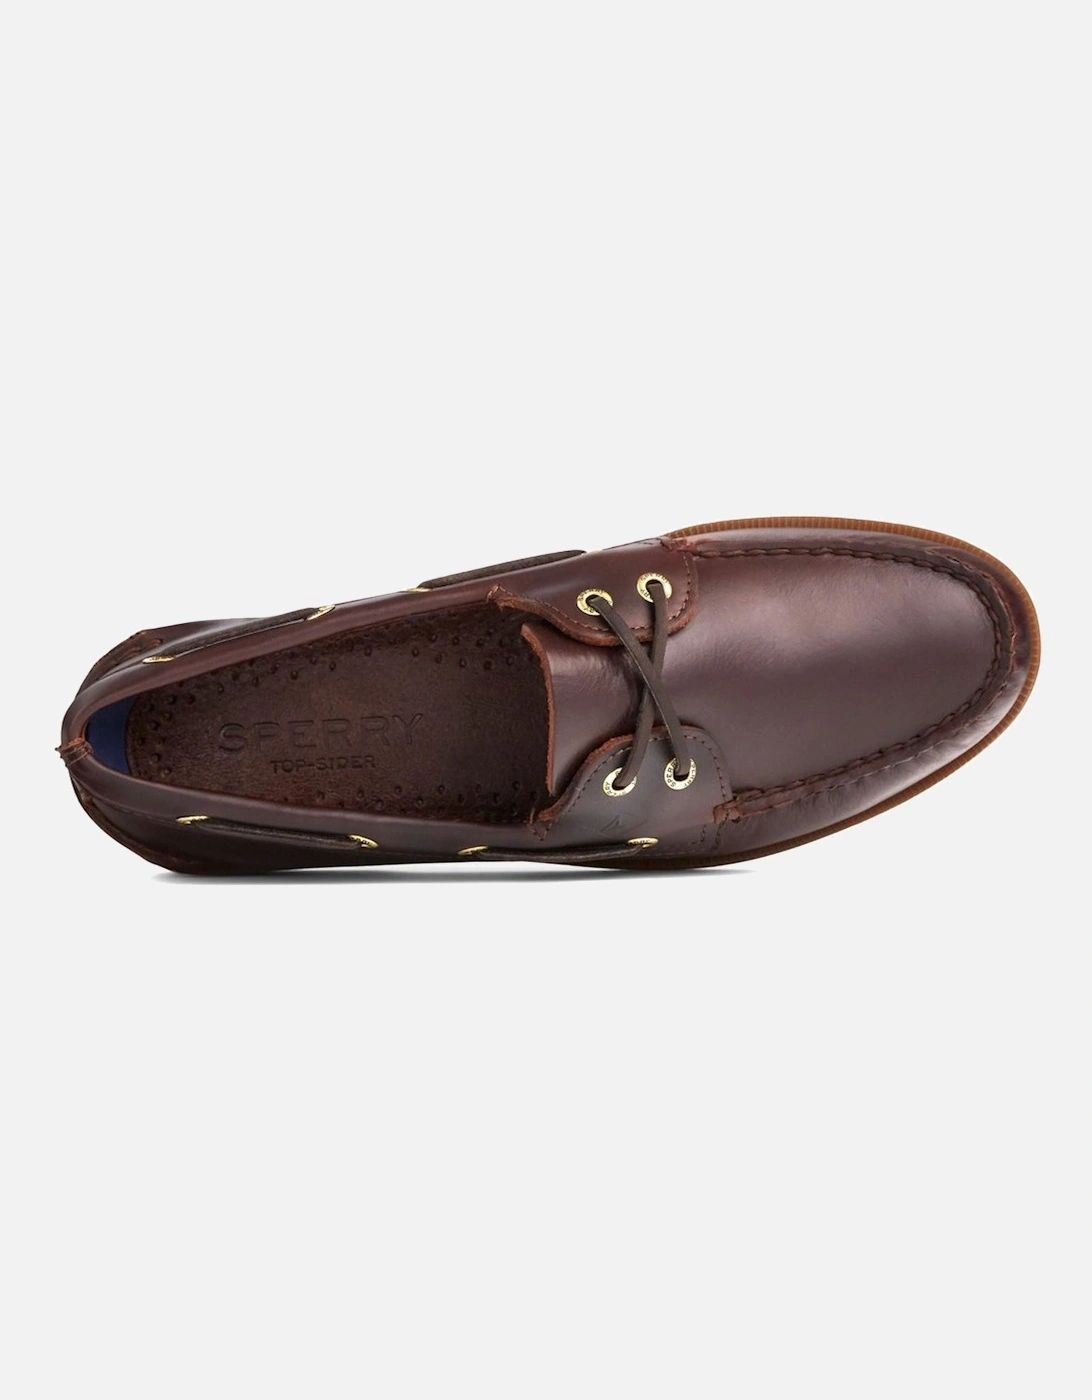 Authentic Mens Original Leather Boat Shoe